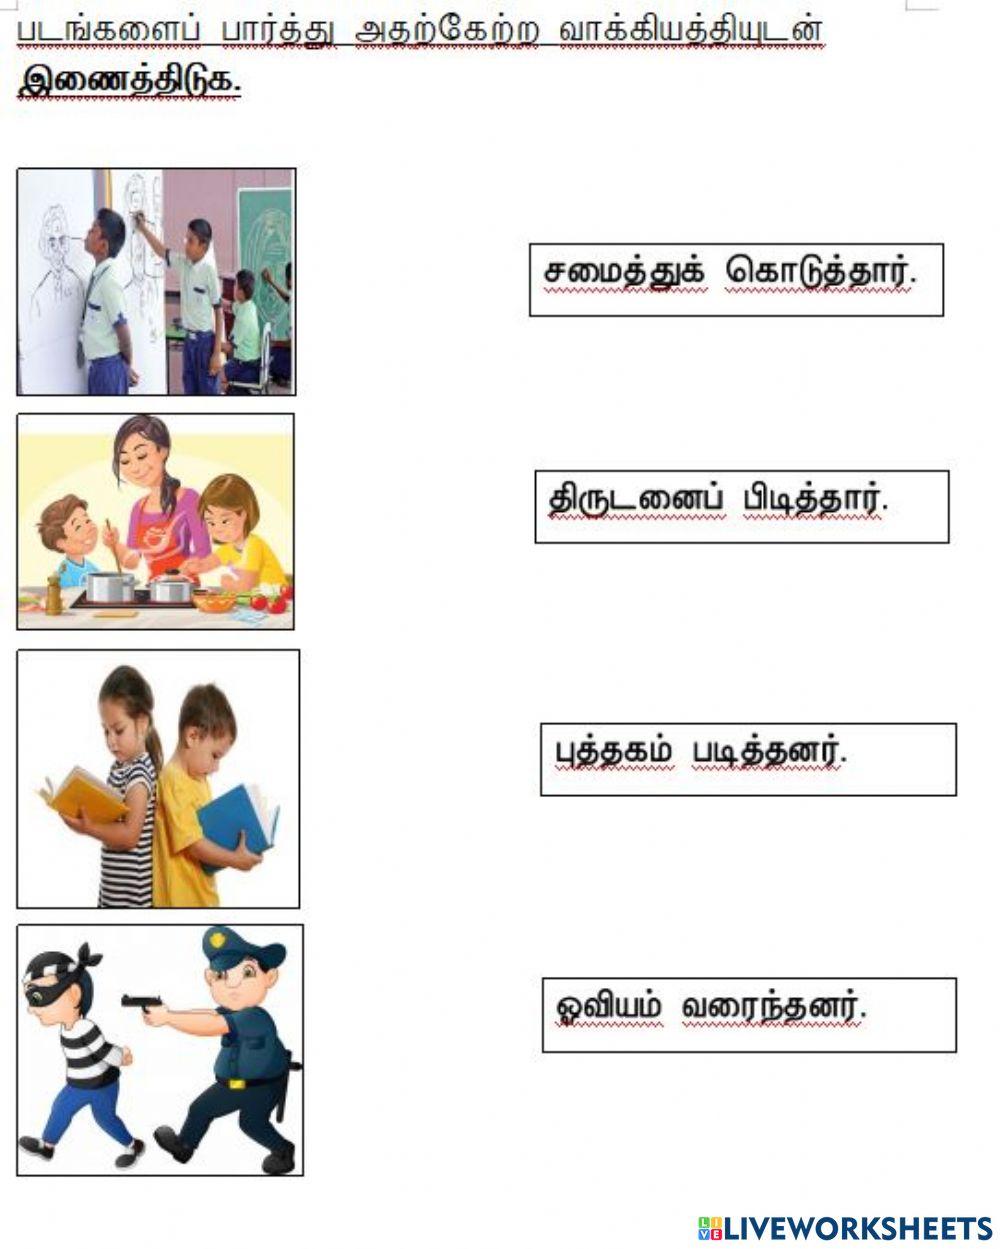 Tamil year 2